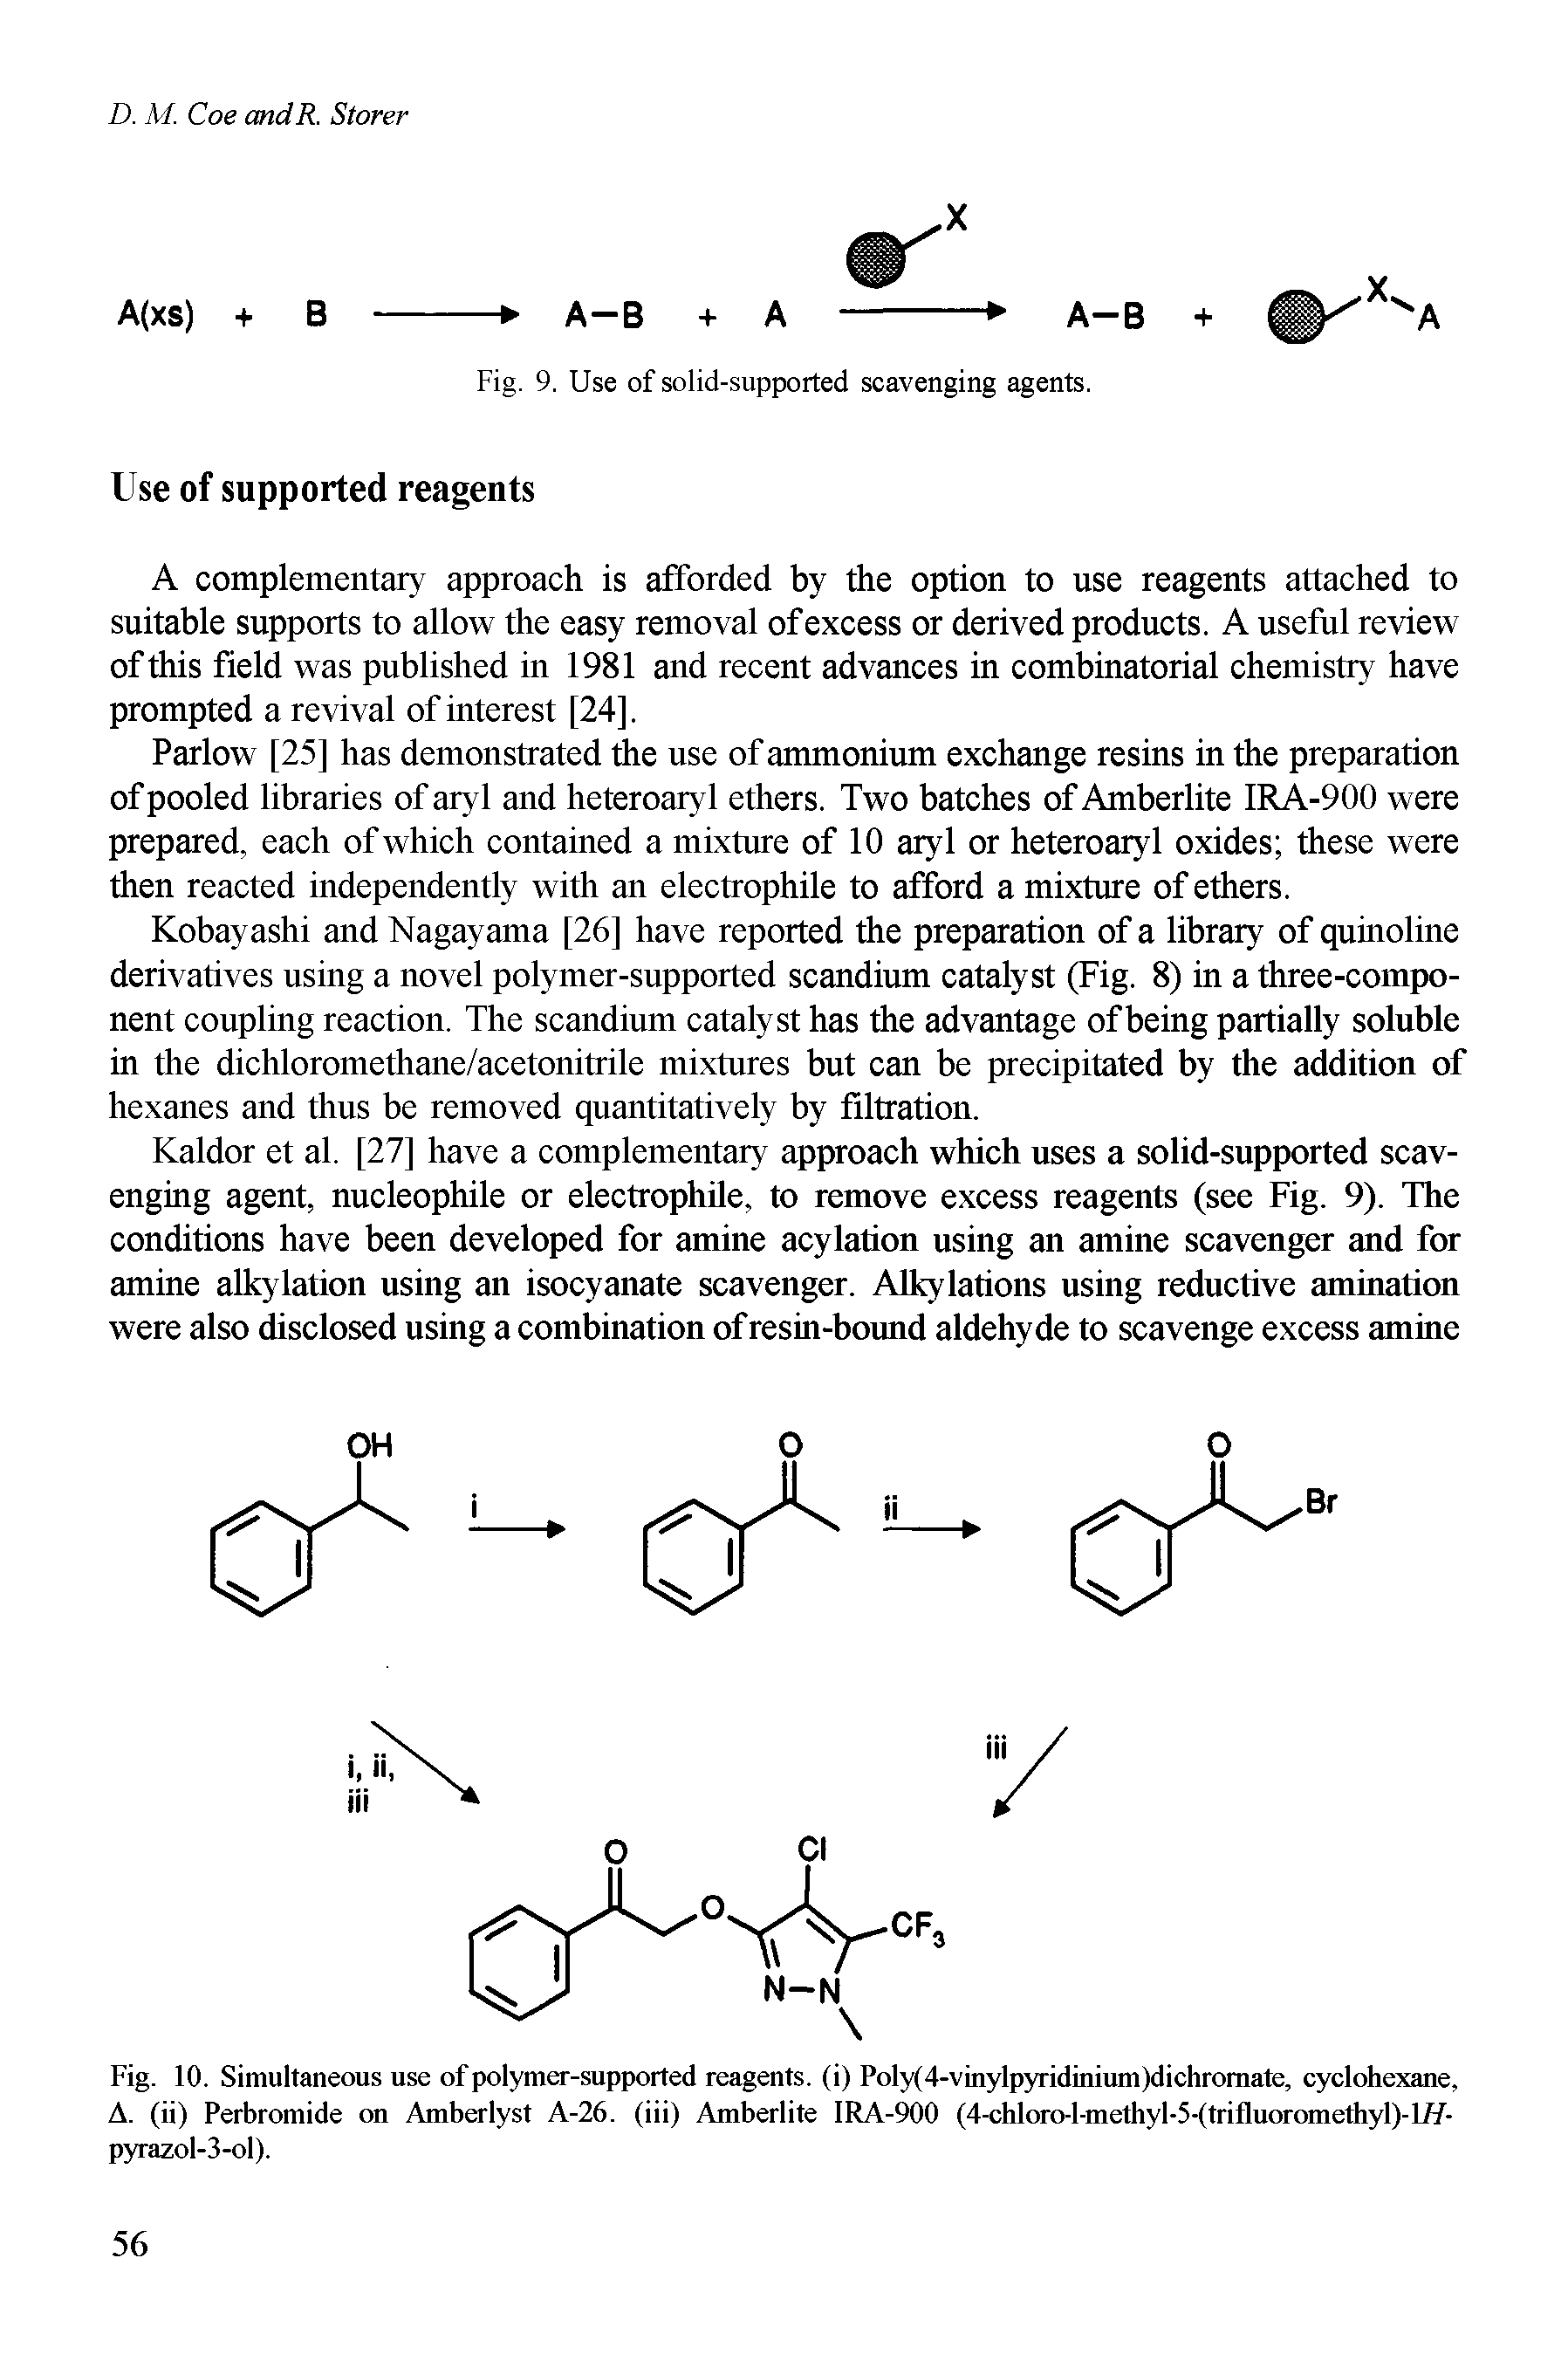 Fig. 10. Simultaneous use of polymer-supported reagents, (i) Poly(4-vinylpyridinium)dicliromate, cyclohexane, A. (ii) Perbromide on Amberlyst A-26. (iii) Amberlite IRA-900 (4-chloro-l-methyl-5-(trifluoromethyl)-li/-pyrazol-3-ol).